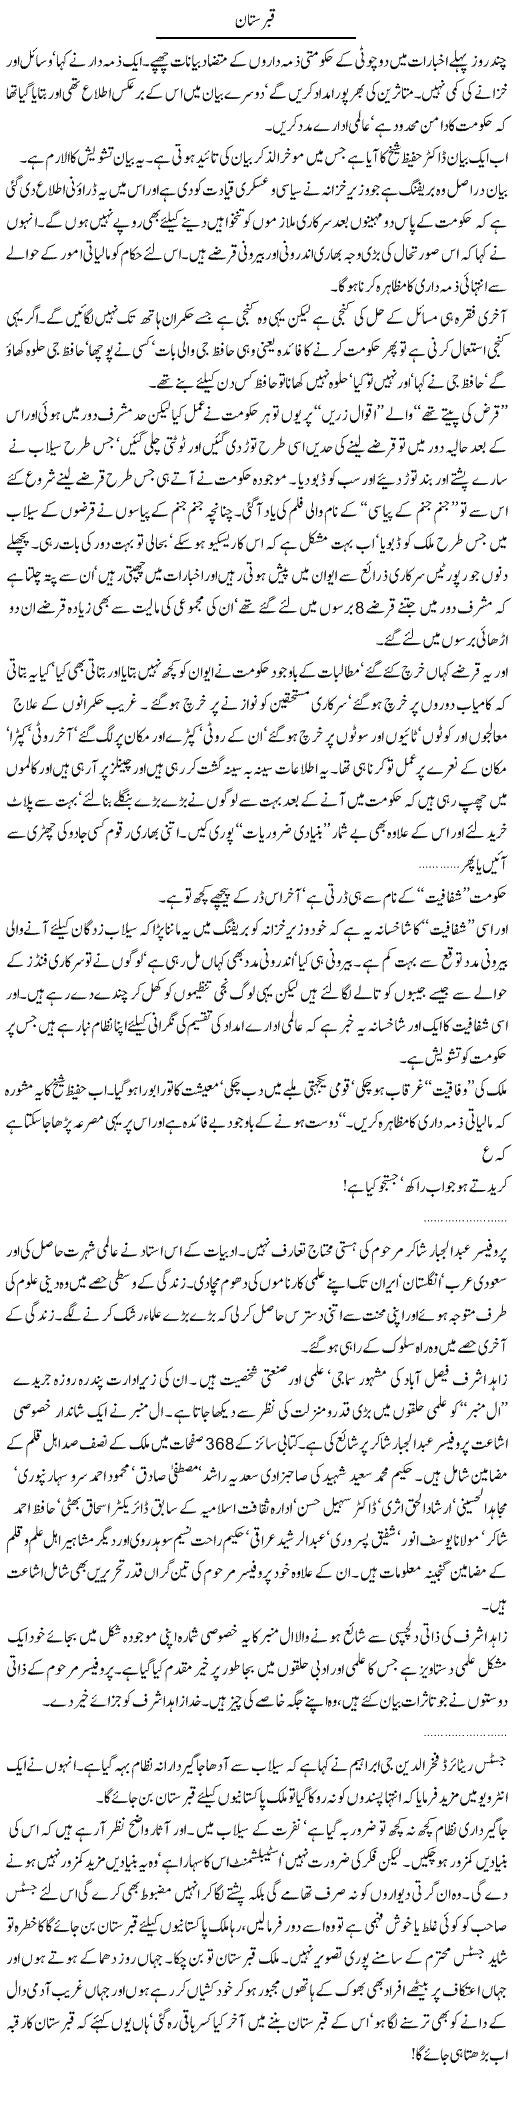 Kabrastan Express Column Abdullah Tariq 8 September 2010